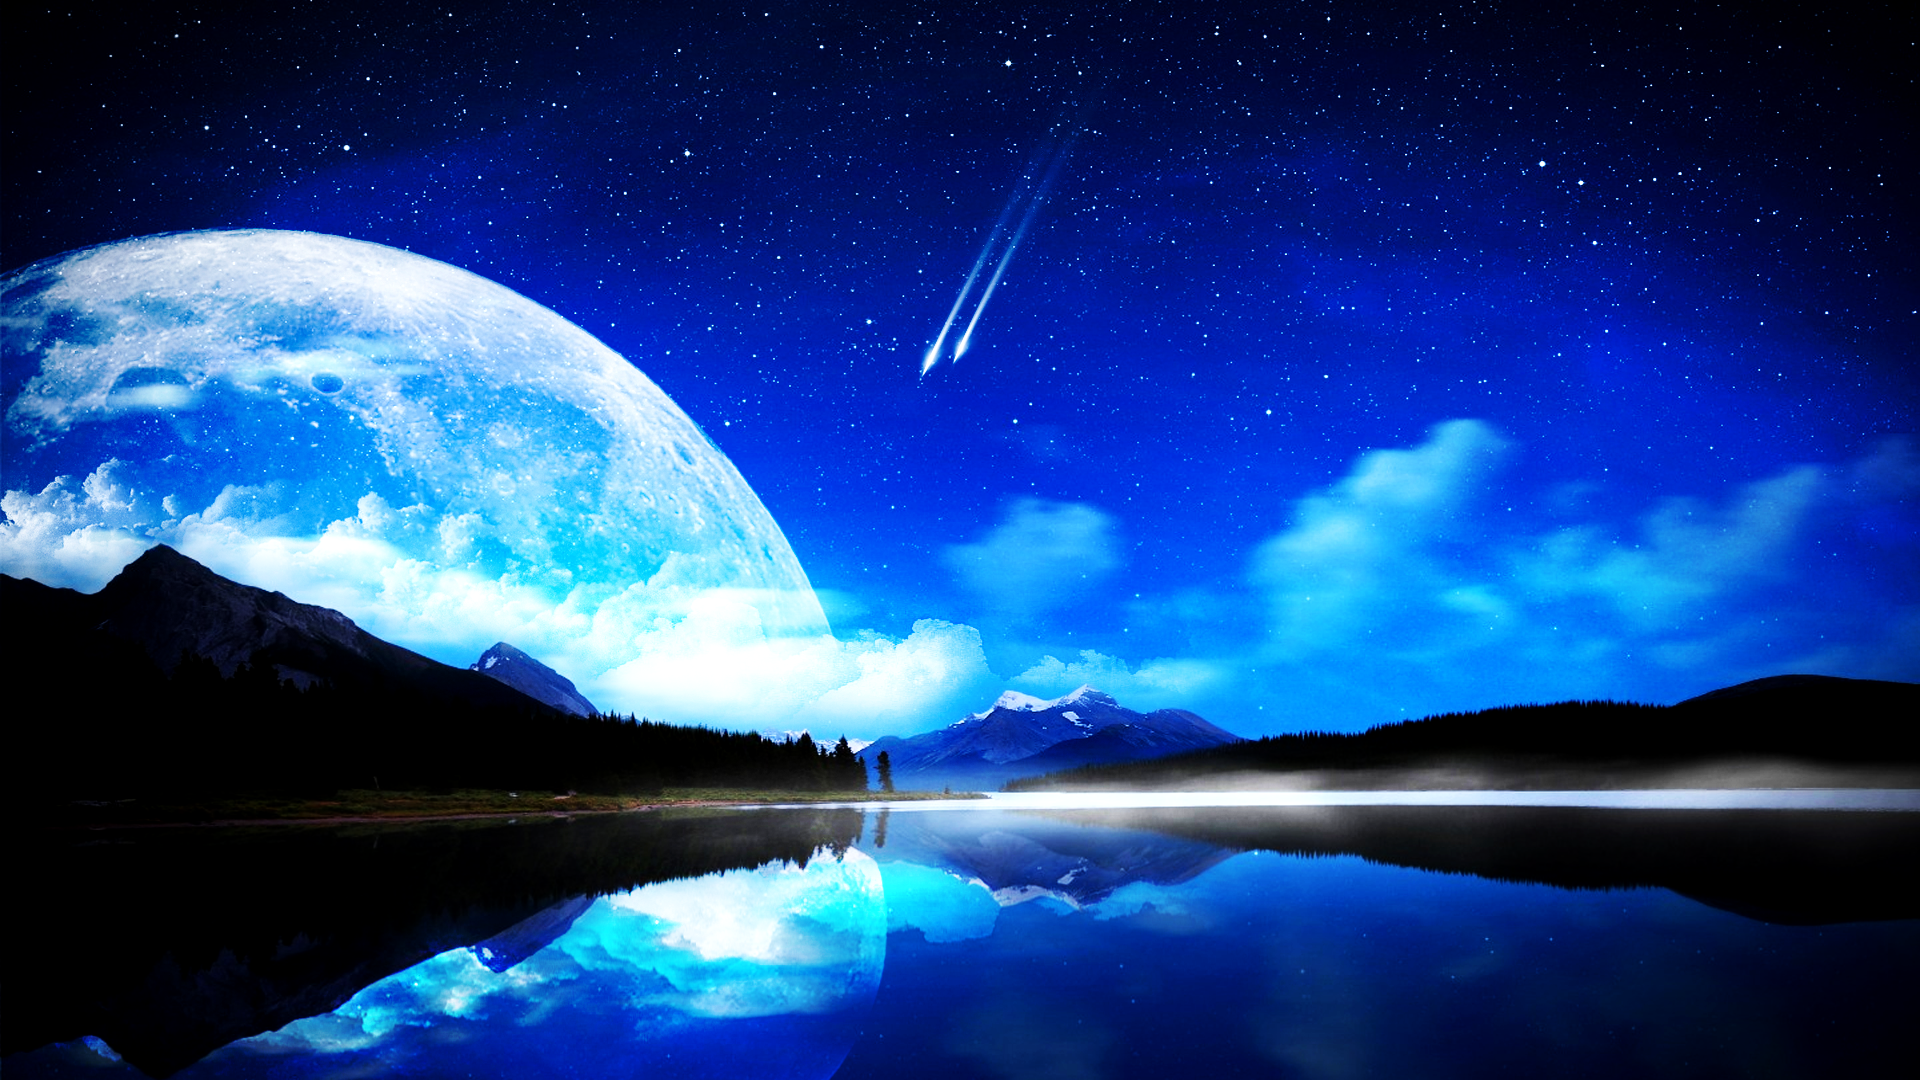 The Blue Moon HD Wallpaper